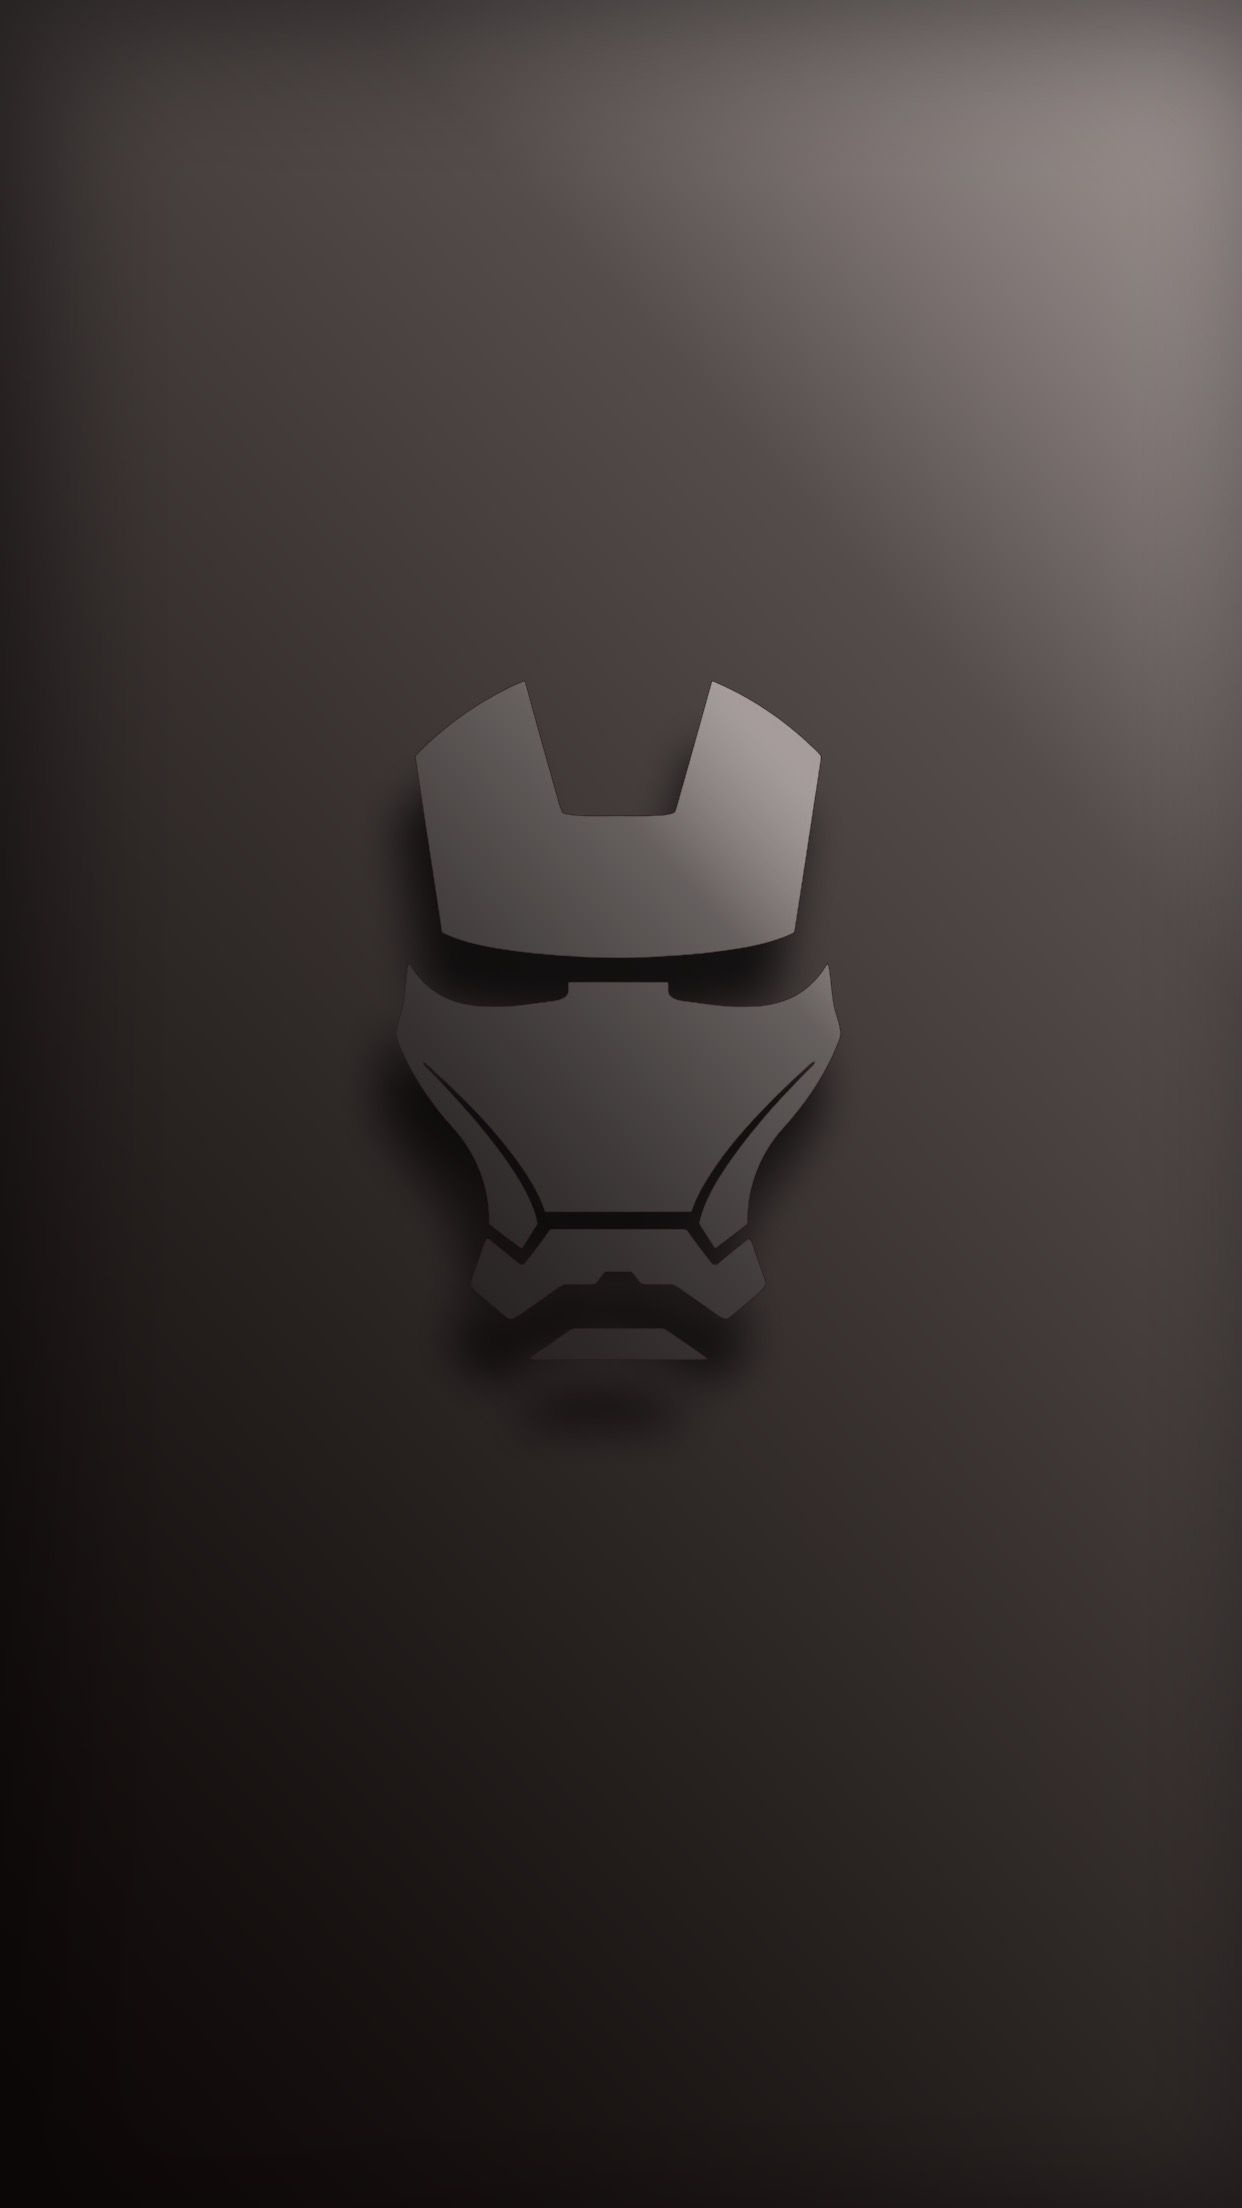 Iron Man's power, Hi-tech suit, Illuminated hand, Epic superhero, 1250x2210 HD Handy